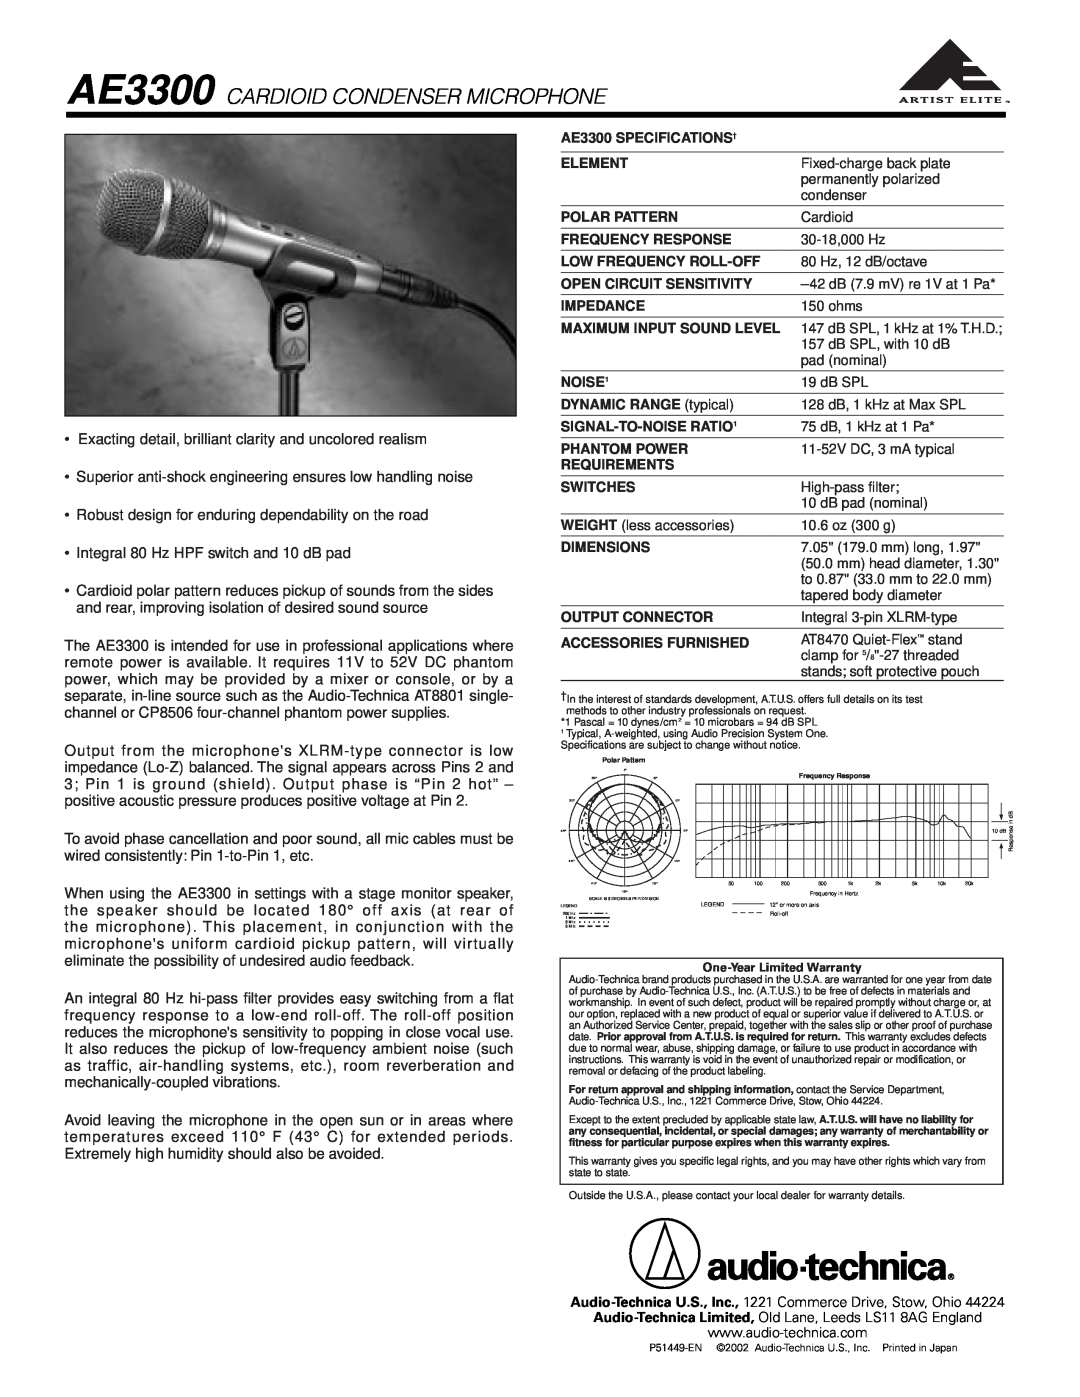 Audio-Technica warranty AE3300 CARDIOID CONDENSER MICROPHONE 